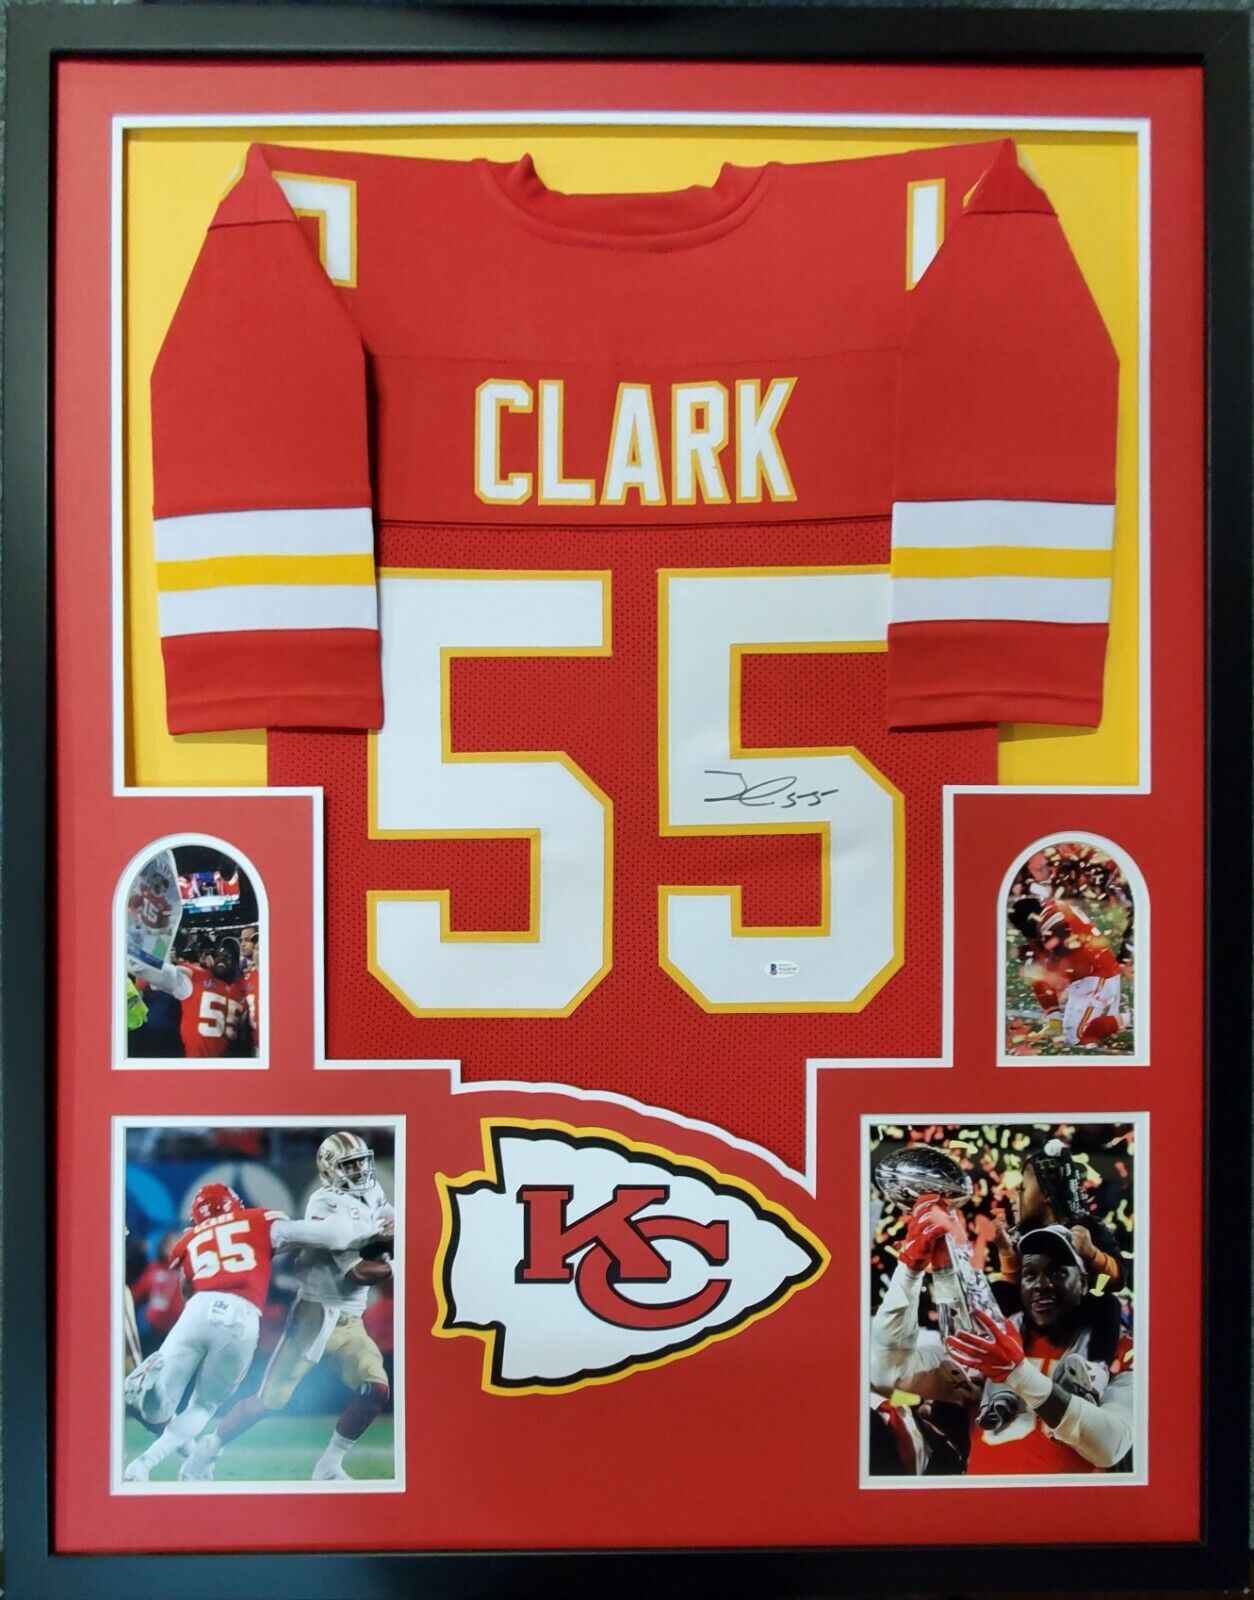 frank clark chiefs jersey